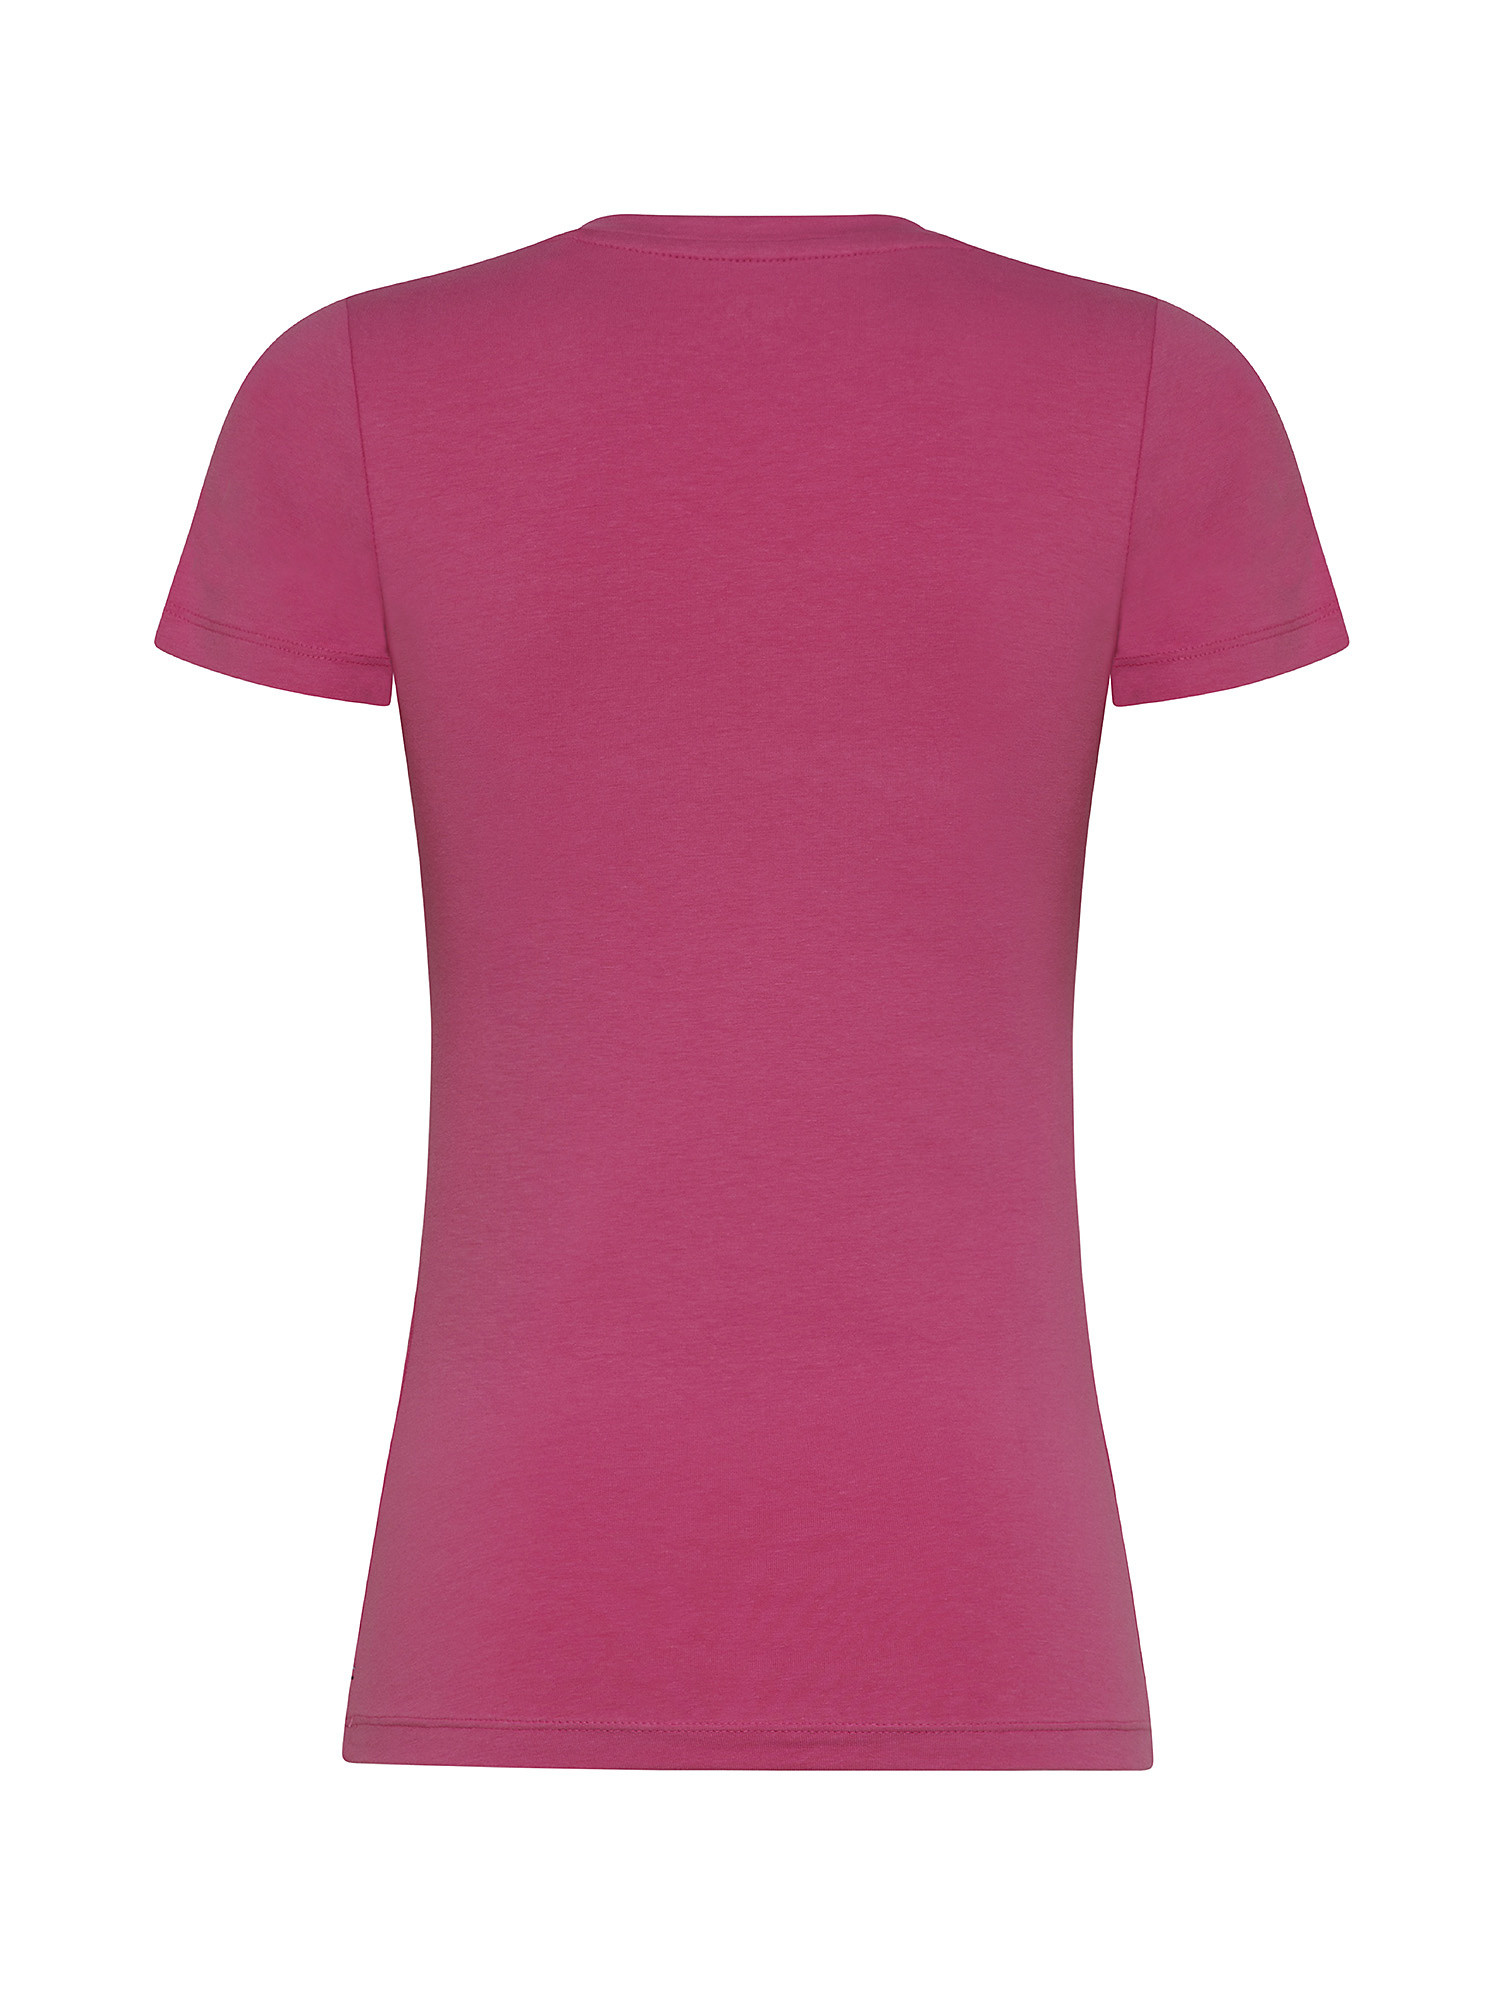 Violette cotton T-shirt, Pink Flamingo, large image number 1